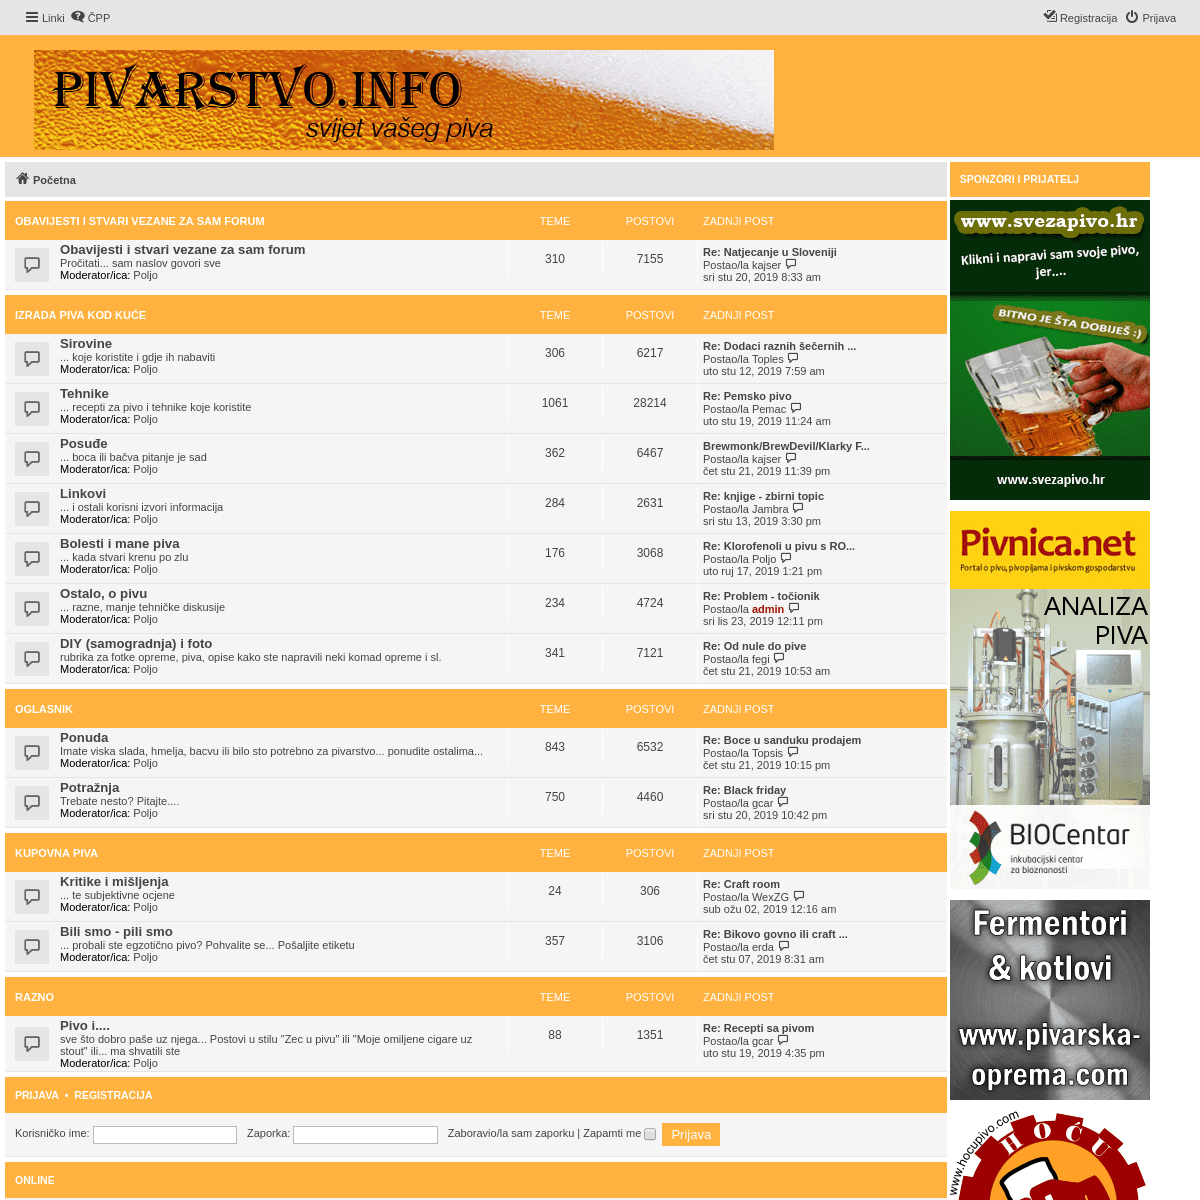 A complete backup of pivarstvo.info